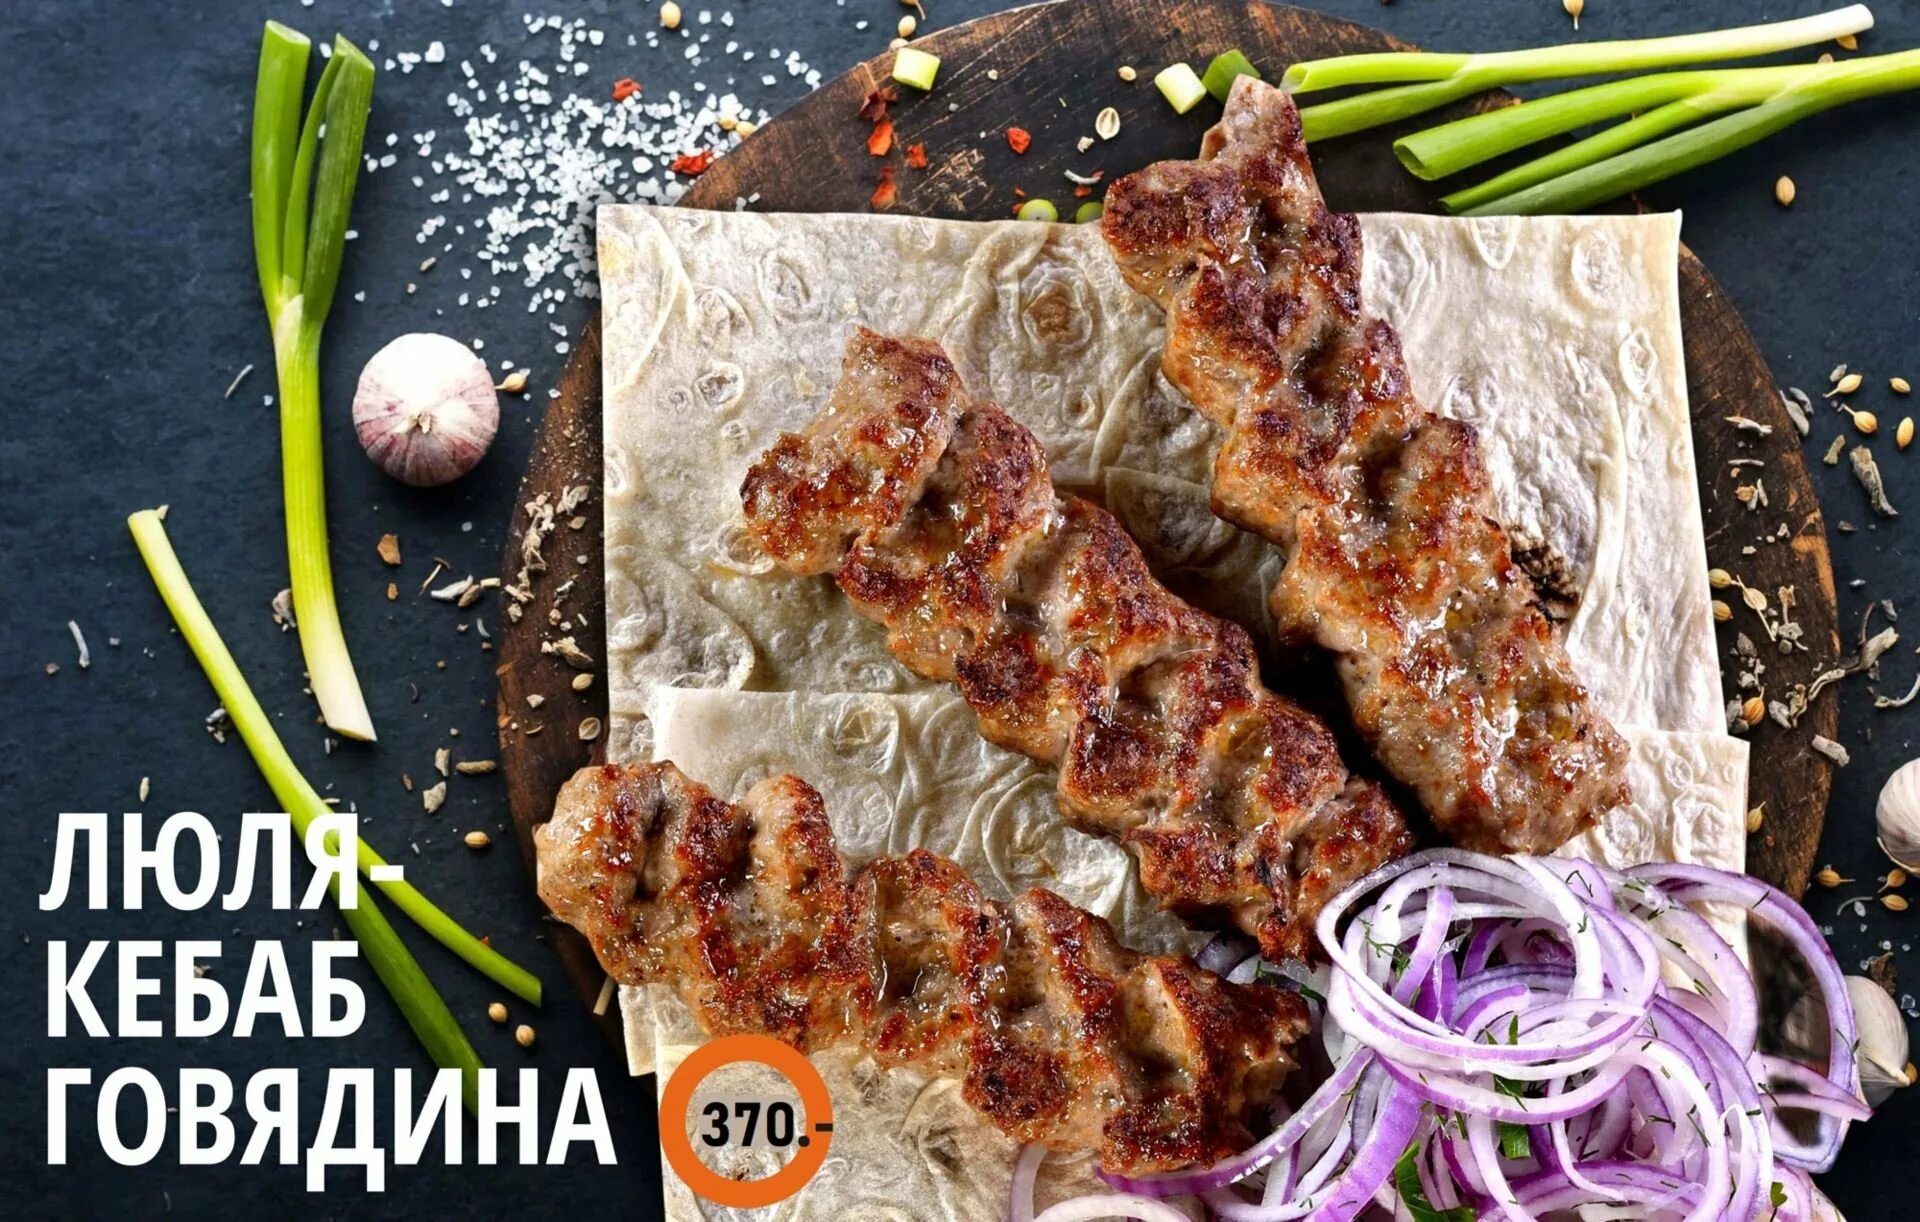 Шаурма шашлык люля Kebab. Люля кебаб реклама. Шашлык реклама. Люля кебаб говяжий.